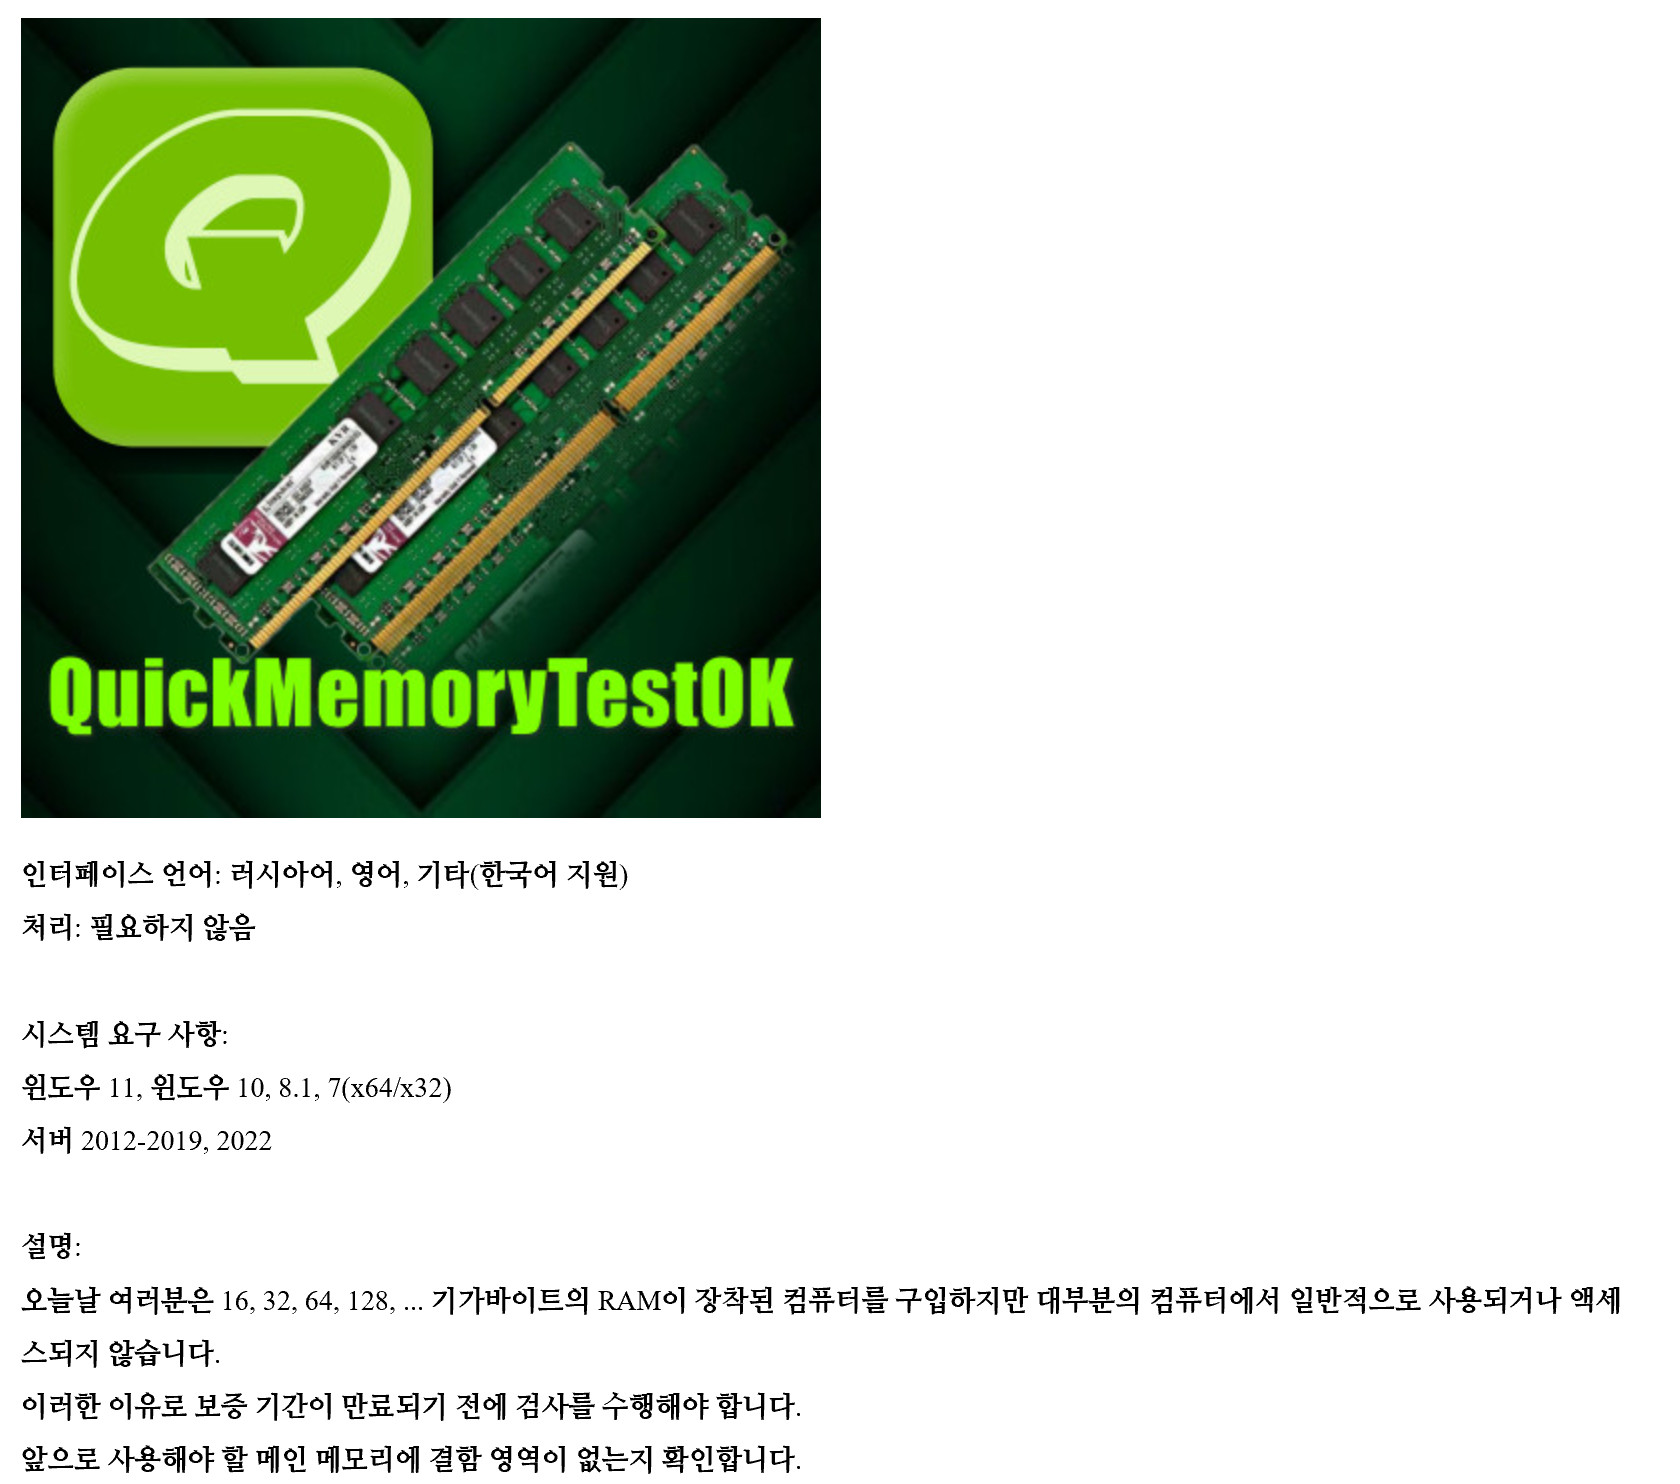 QuickMemoryTestOK 4.68 download the last version for windows